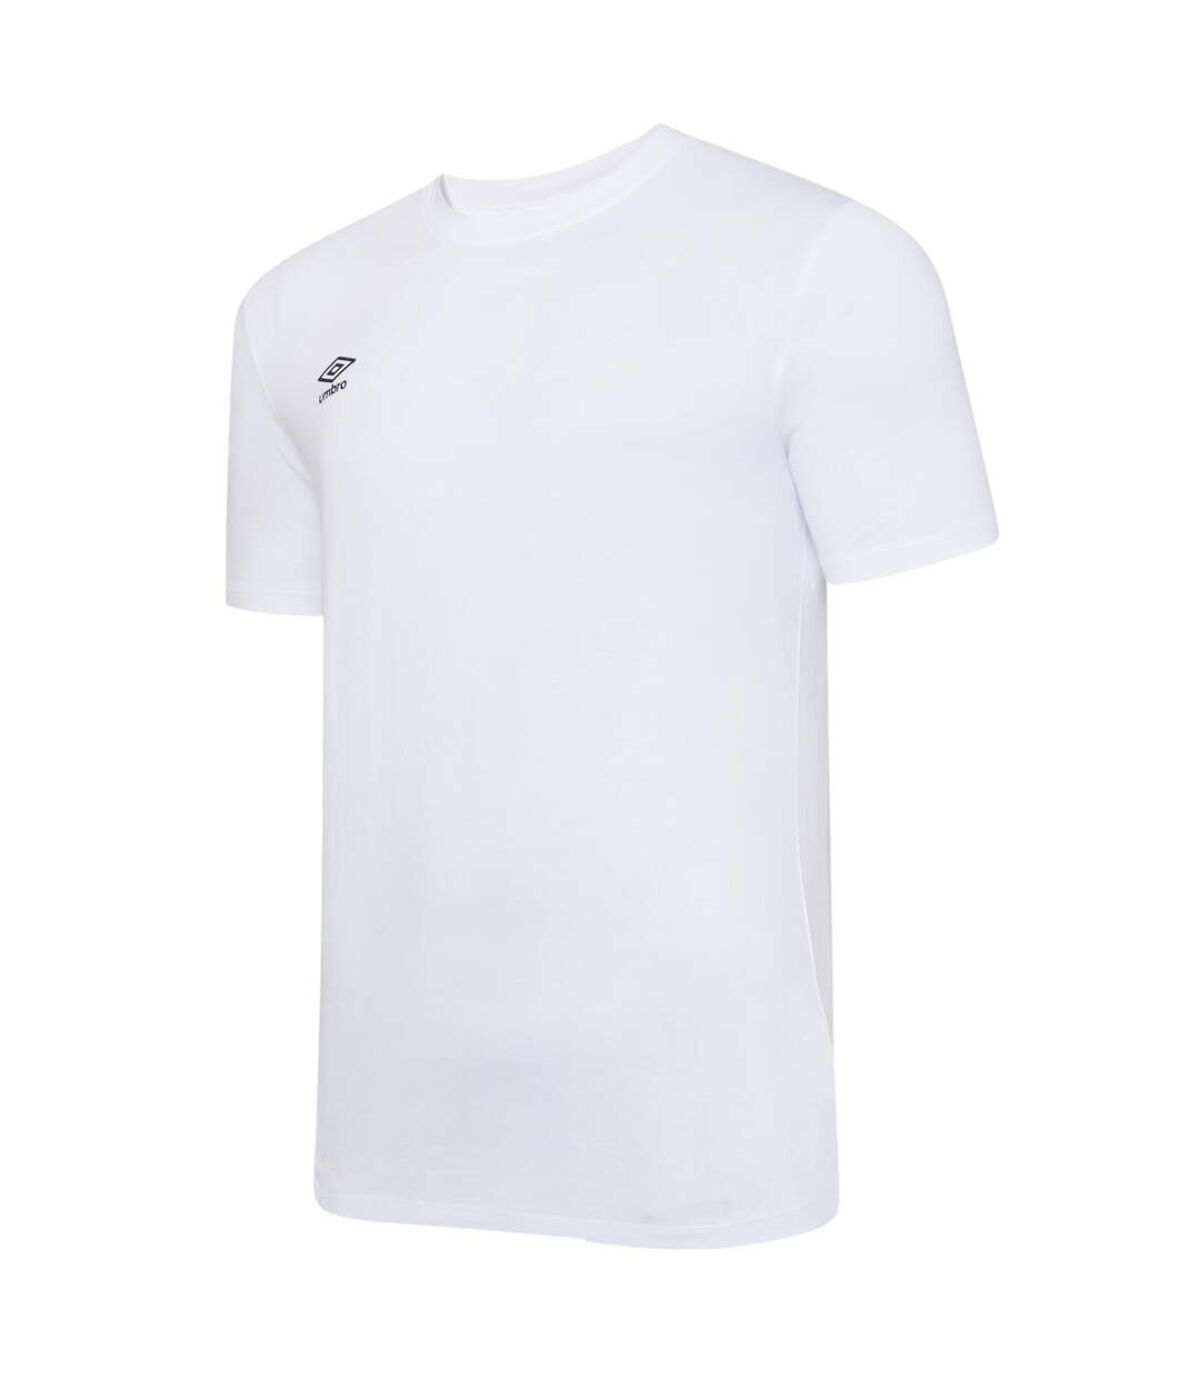 Umbro - T-shirt CLUB LEISURE - Homme (Blanc / Noir) - UTUO272